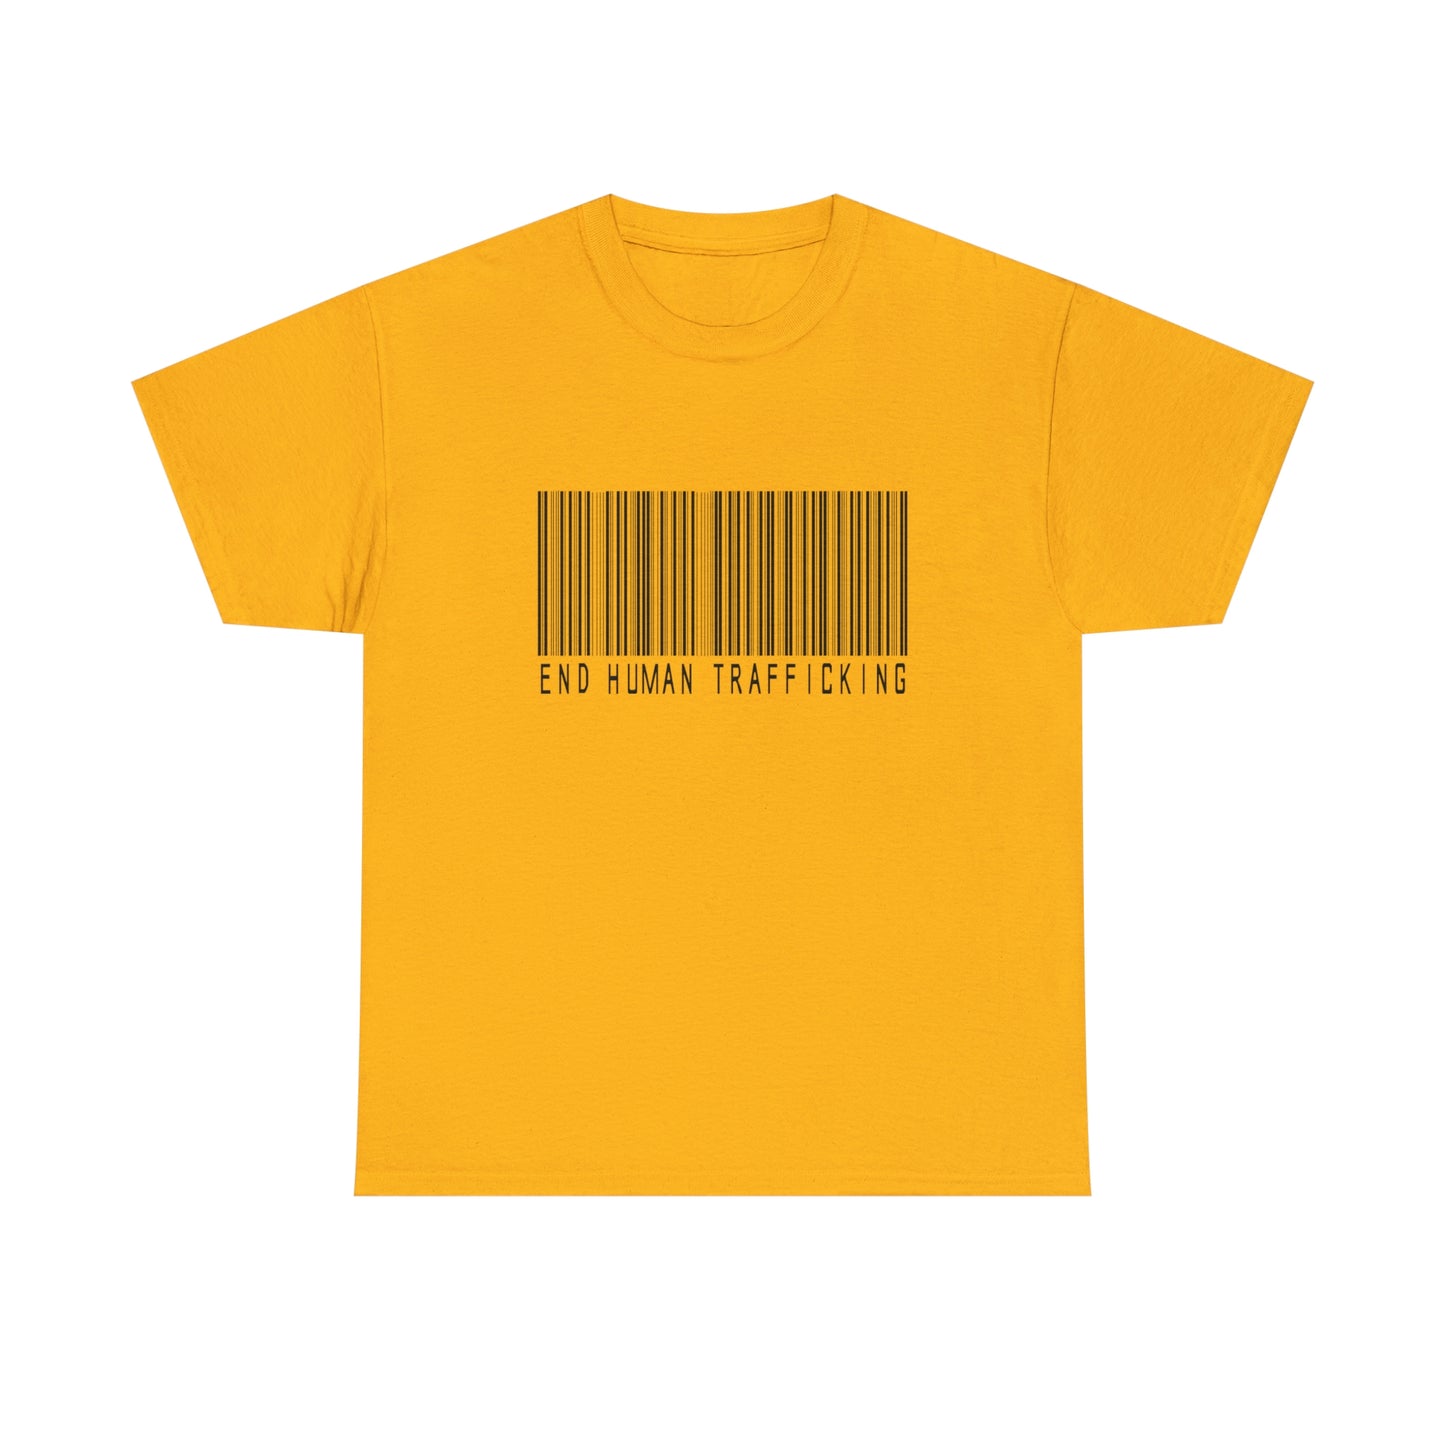 Human Trafficking T-Shirt Trafficking TShirt For Conservative T Shirt For Social Issue Awareness Shirt Save The Children T-Shirt Cause Shirt